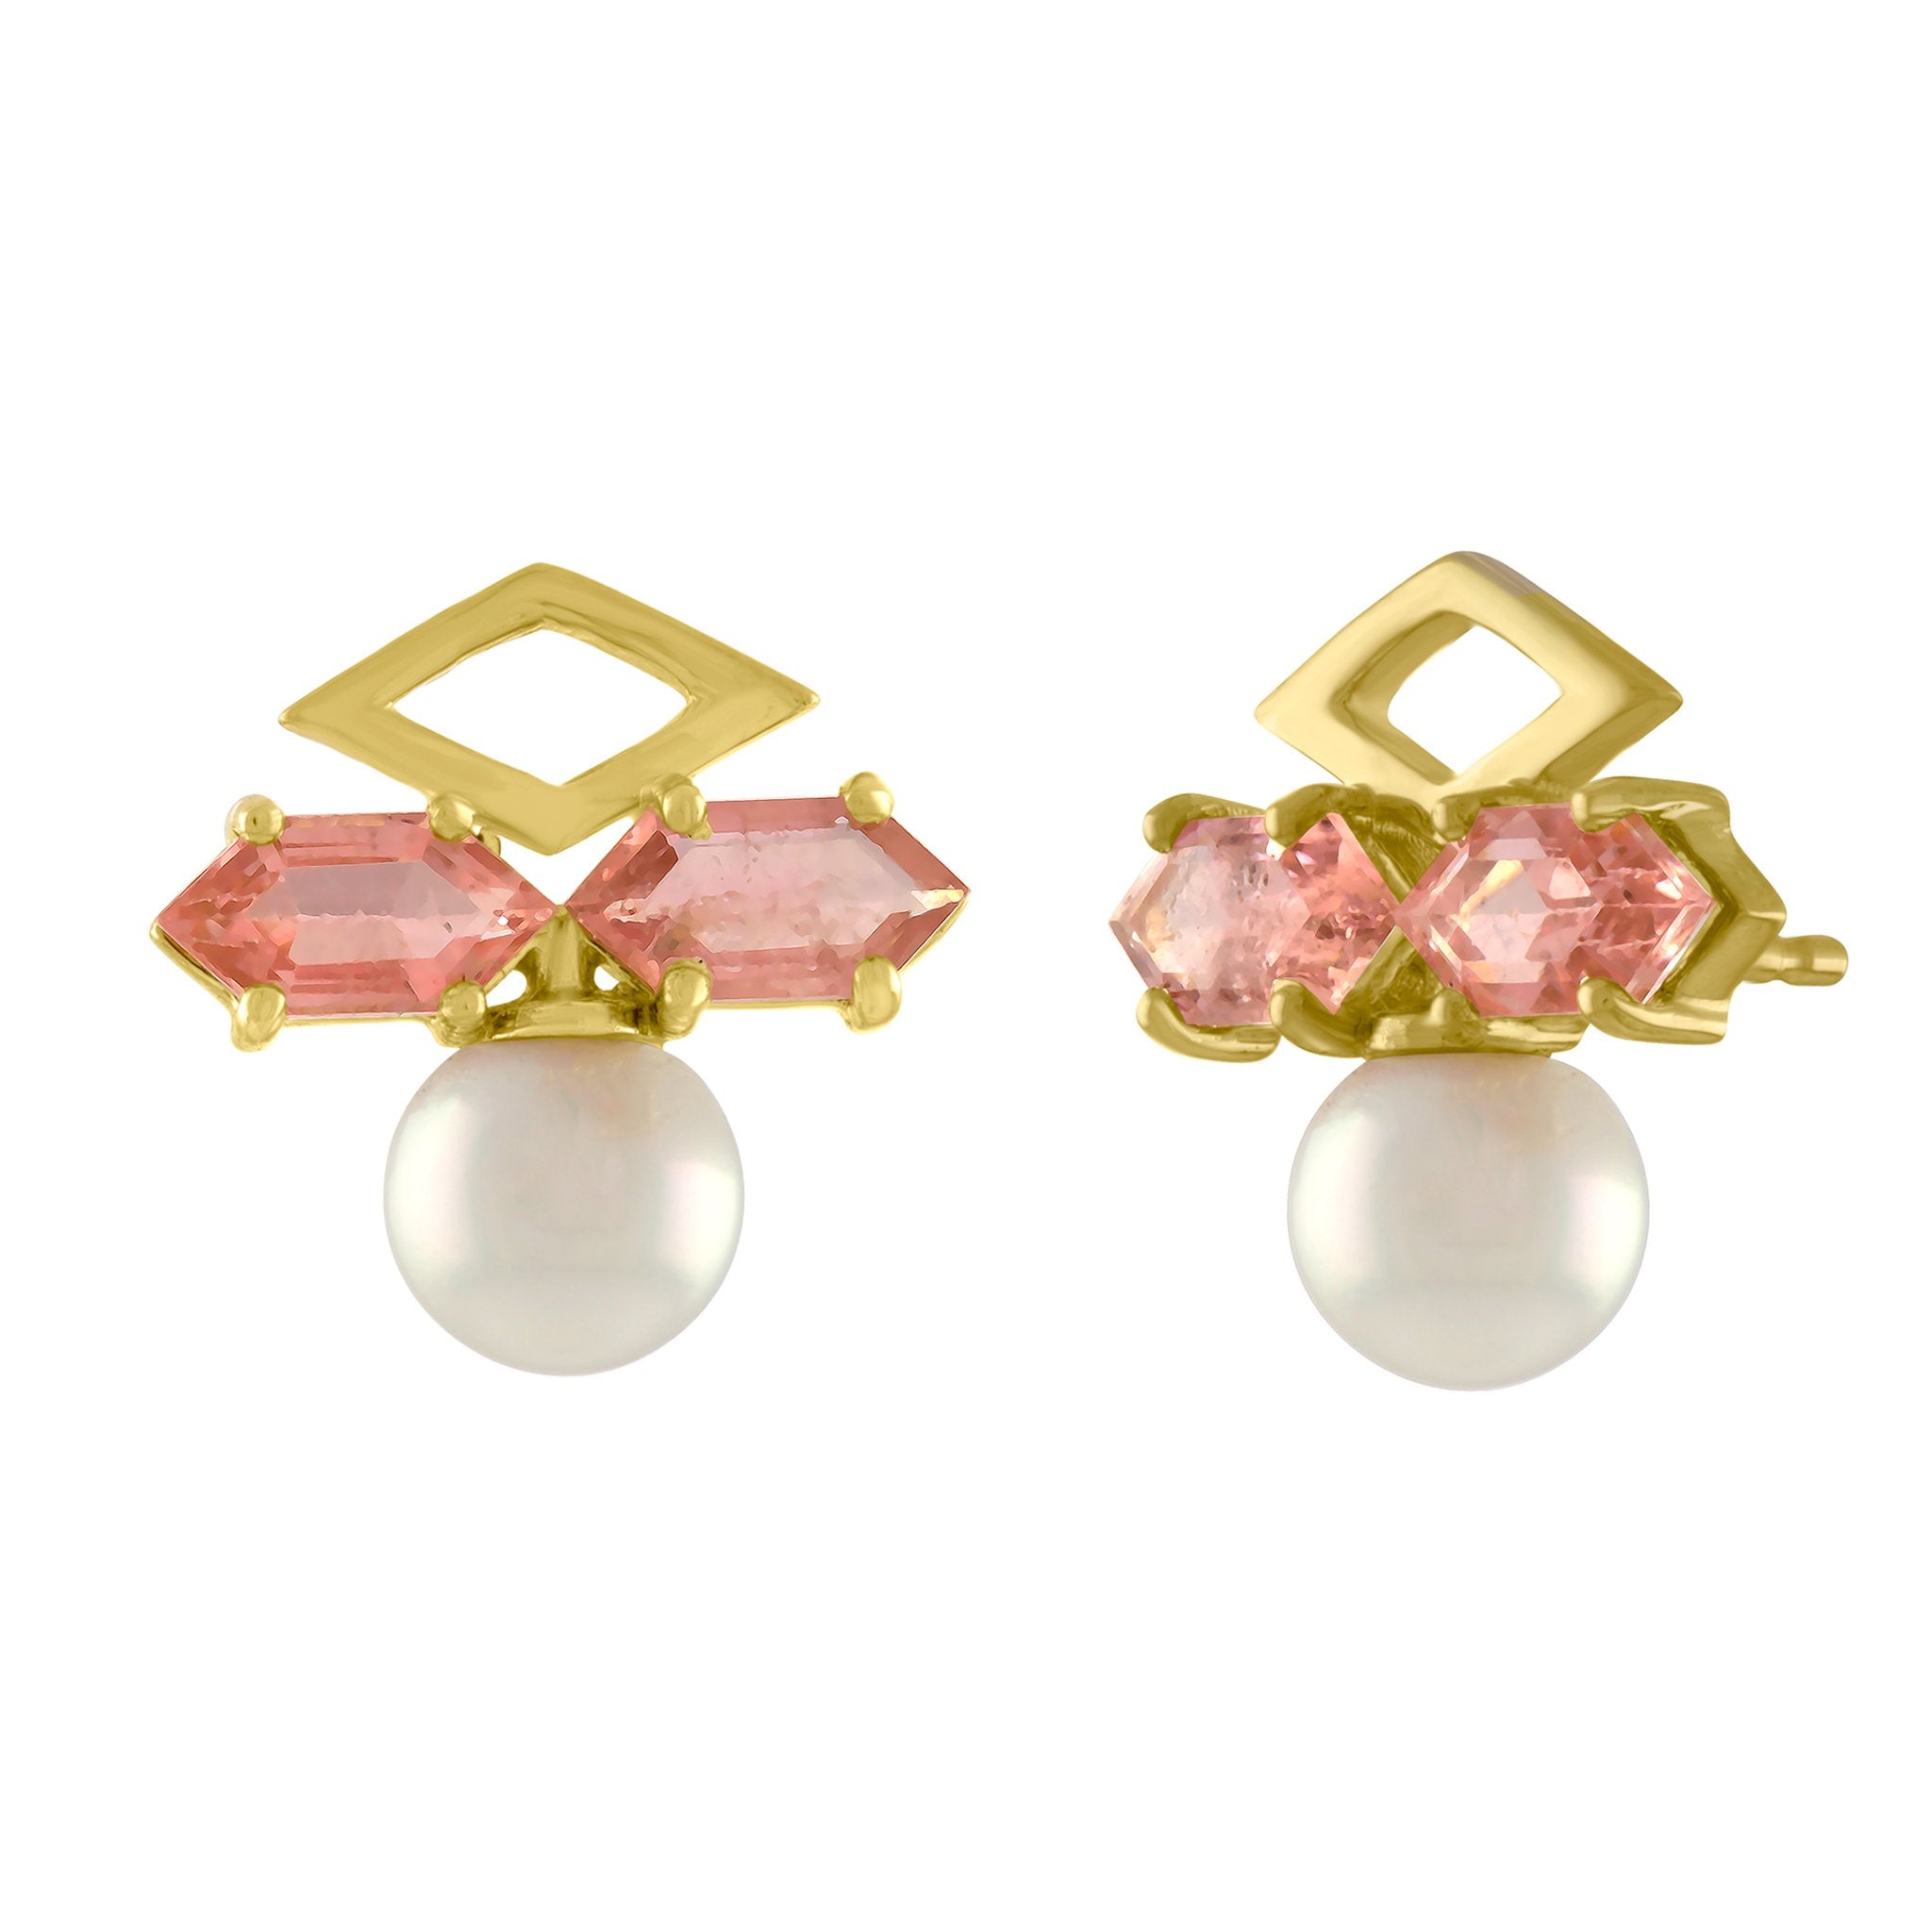 Geo Stud Earrings: 14k Gold, Pearl, Pink Tourmaline Kites